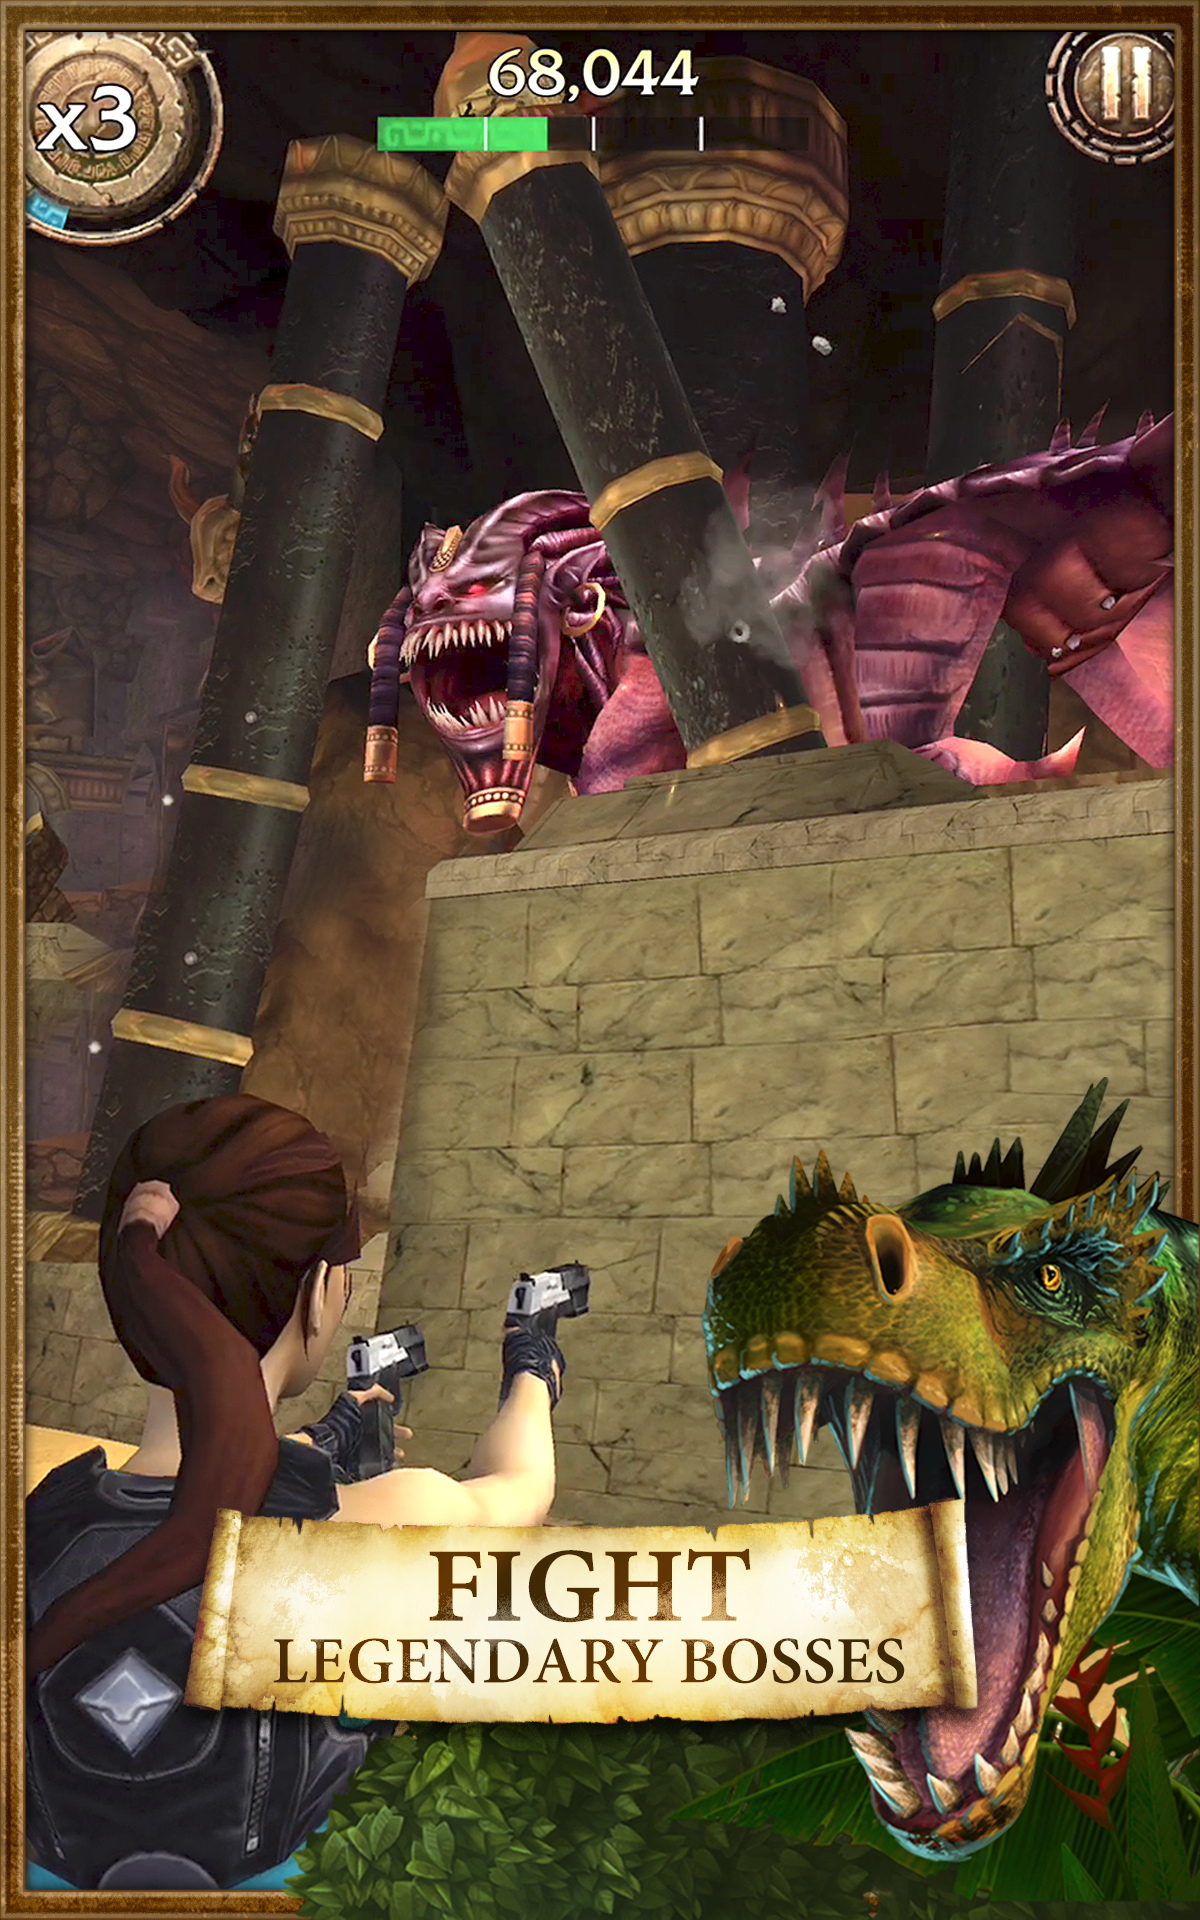 Screenshot of Lara Croft: Relic Run